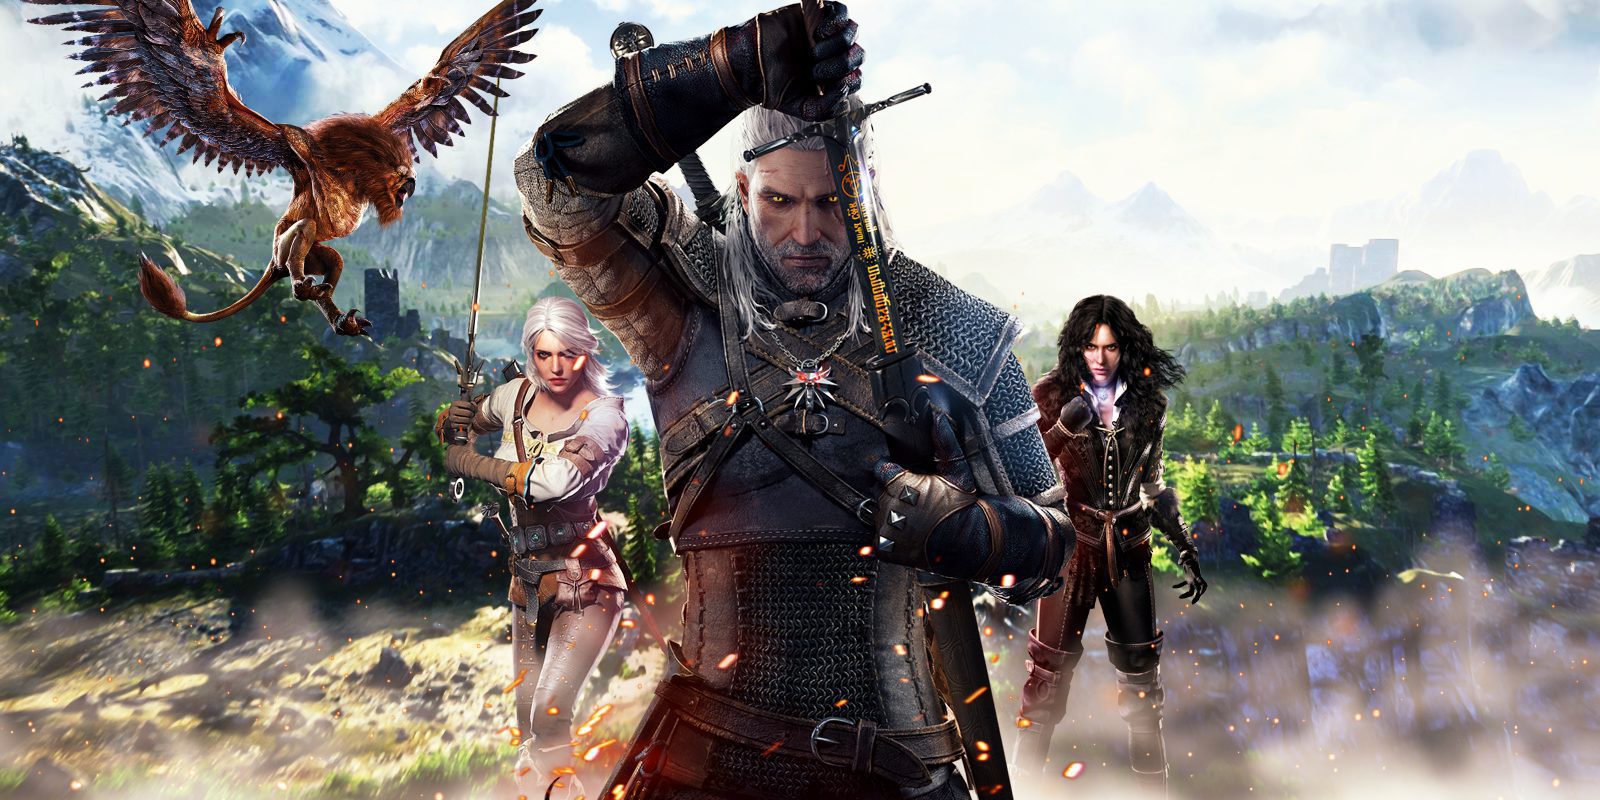 El actor de doblaje de Geralt asegura "no saber nada" sobre 'The Witcher 4'